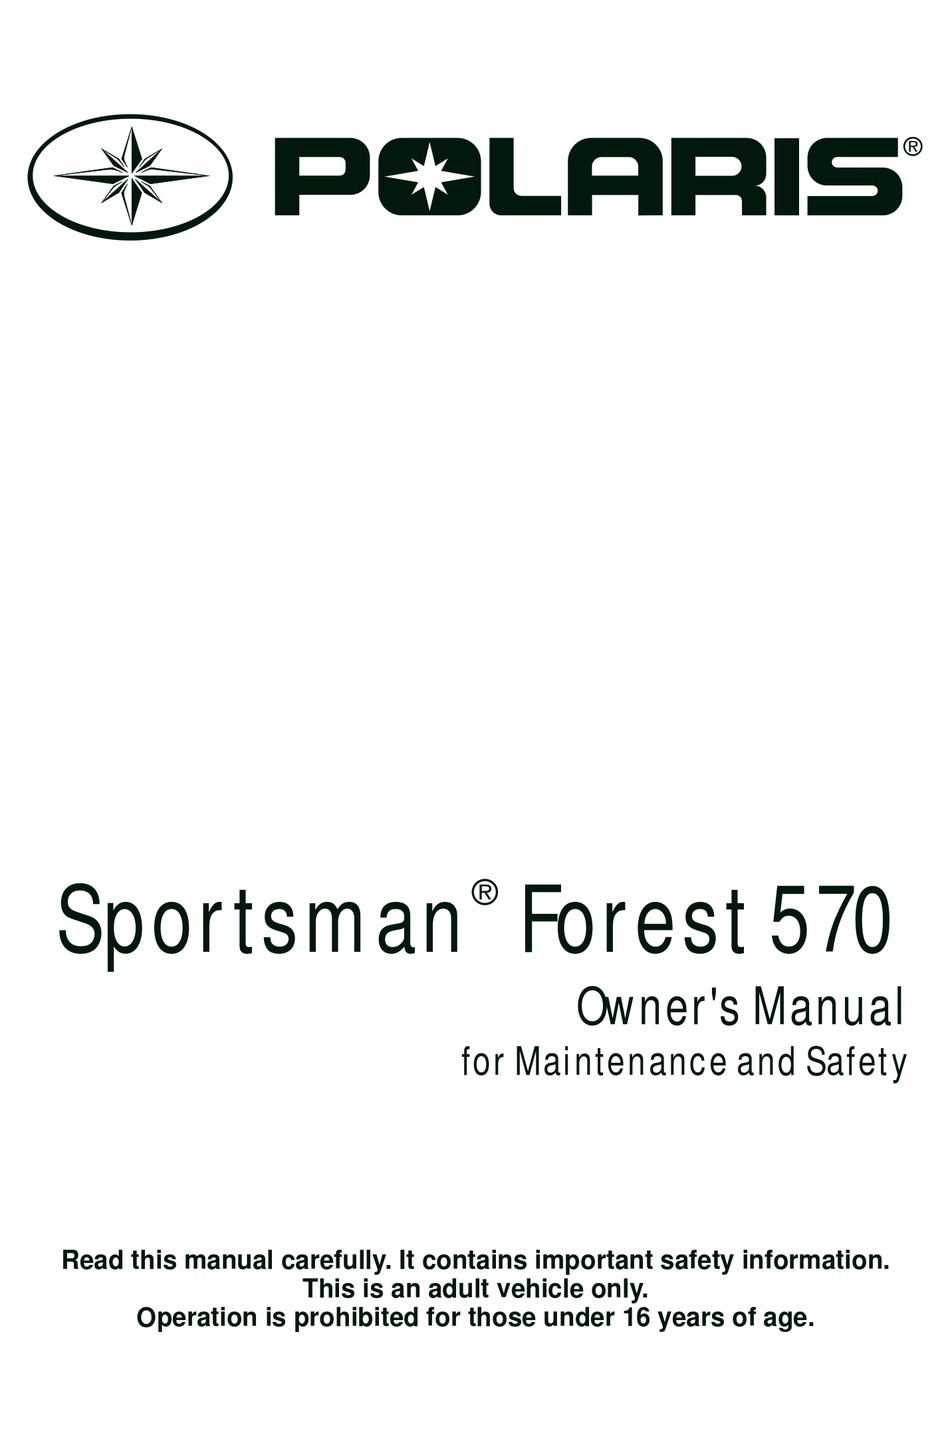 POLARIS SPORTSMAN FOREST570 OWNER'S MANUAL Pdf Download | ManualsLib